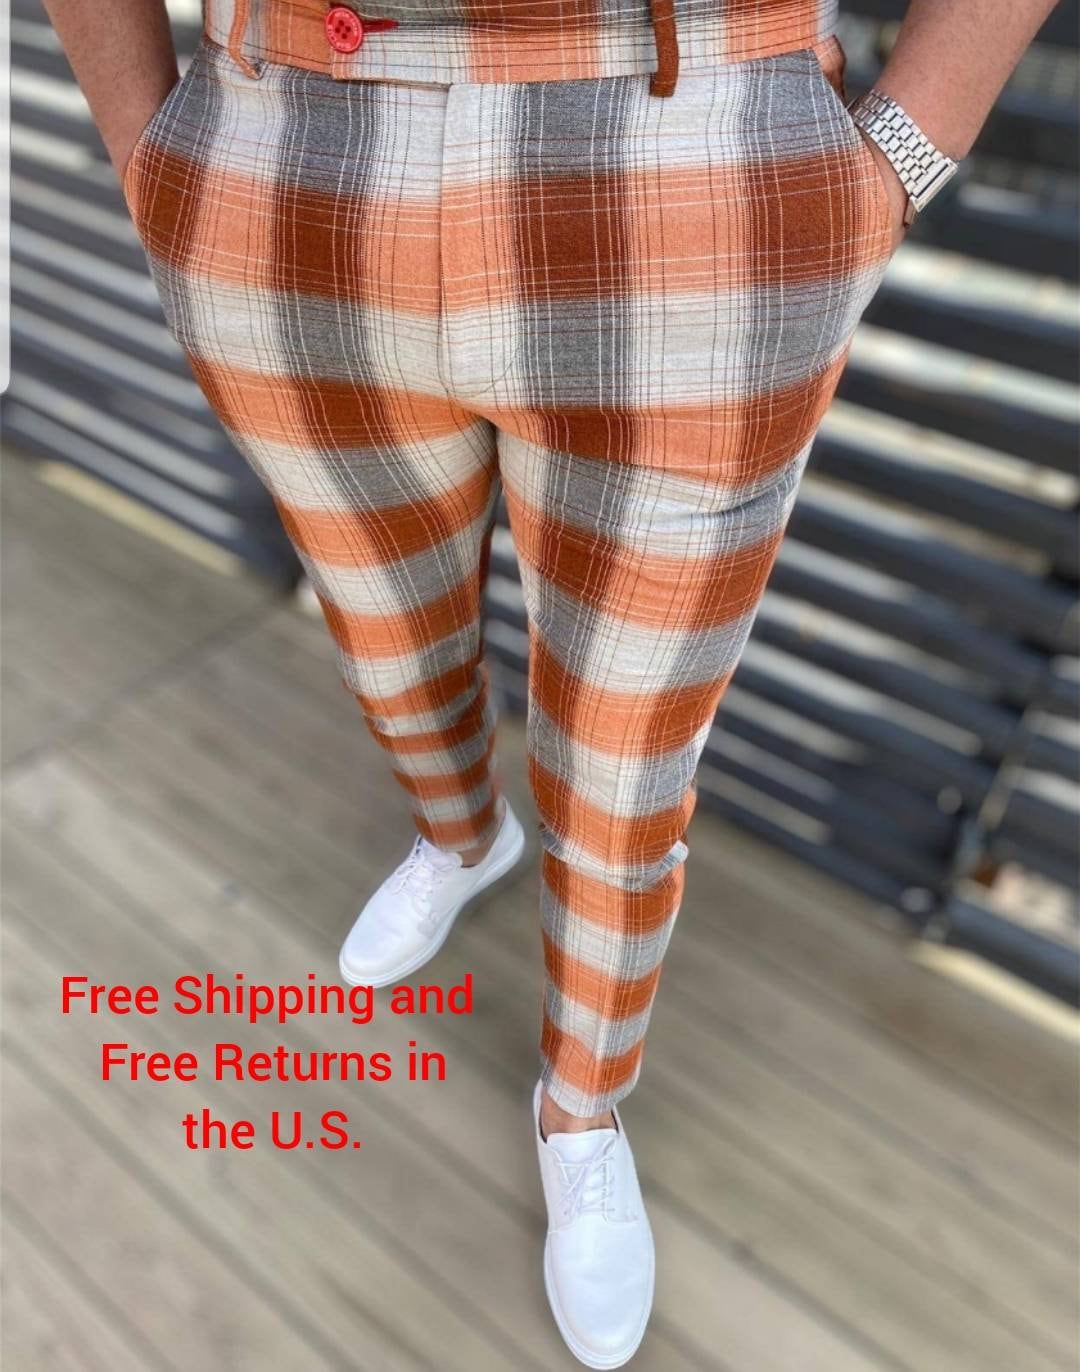 Buy Burnt Orange Pants Online In India  Etsy India